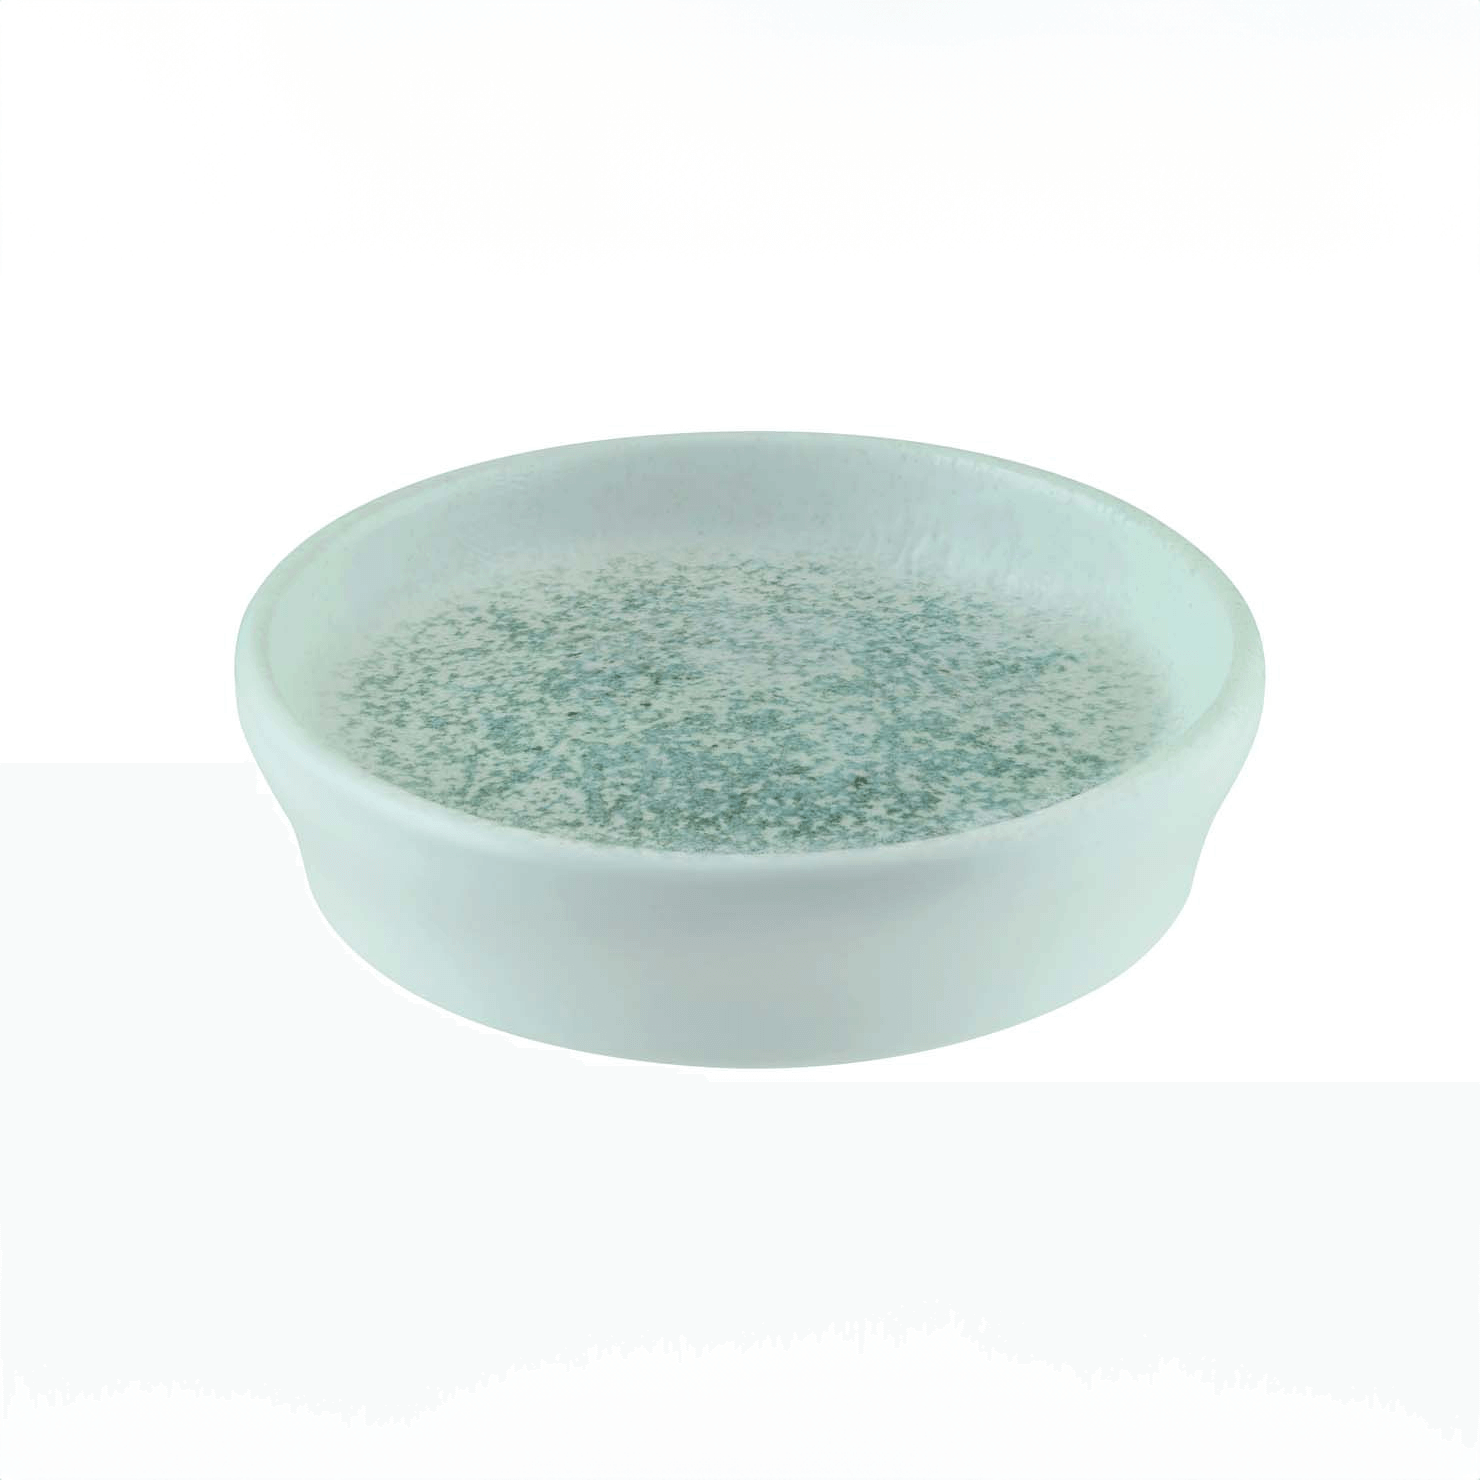 Lunar Ocean Hygge Bowl 10cm